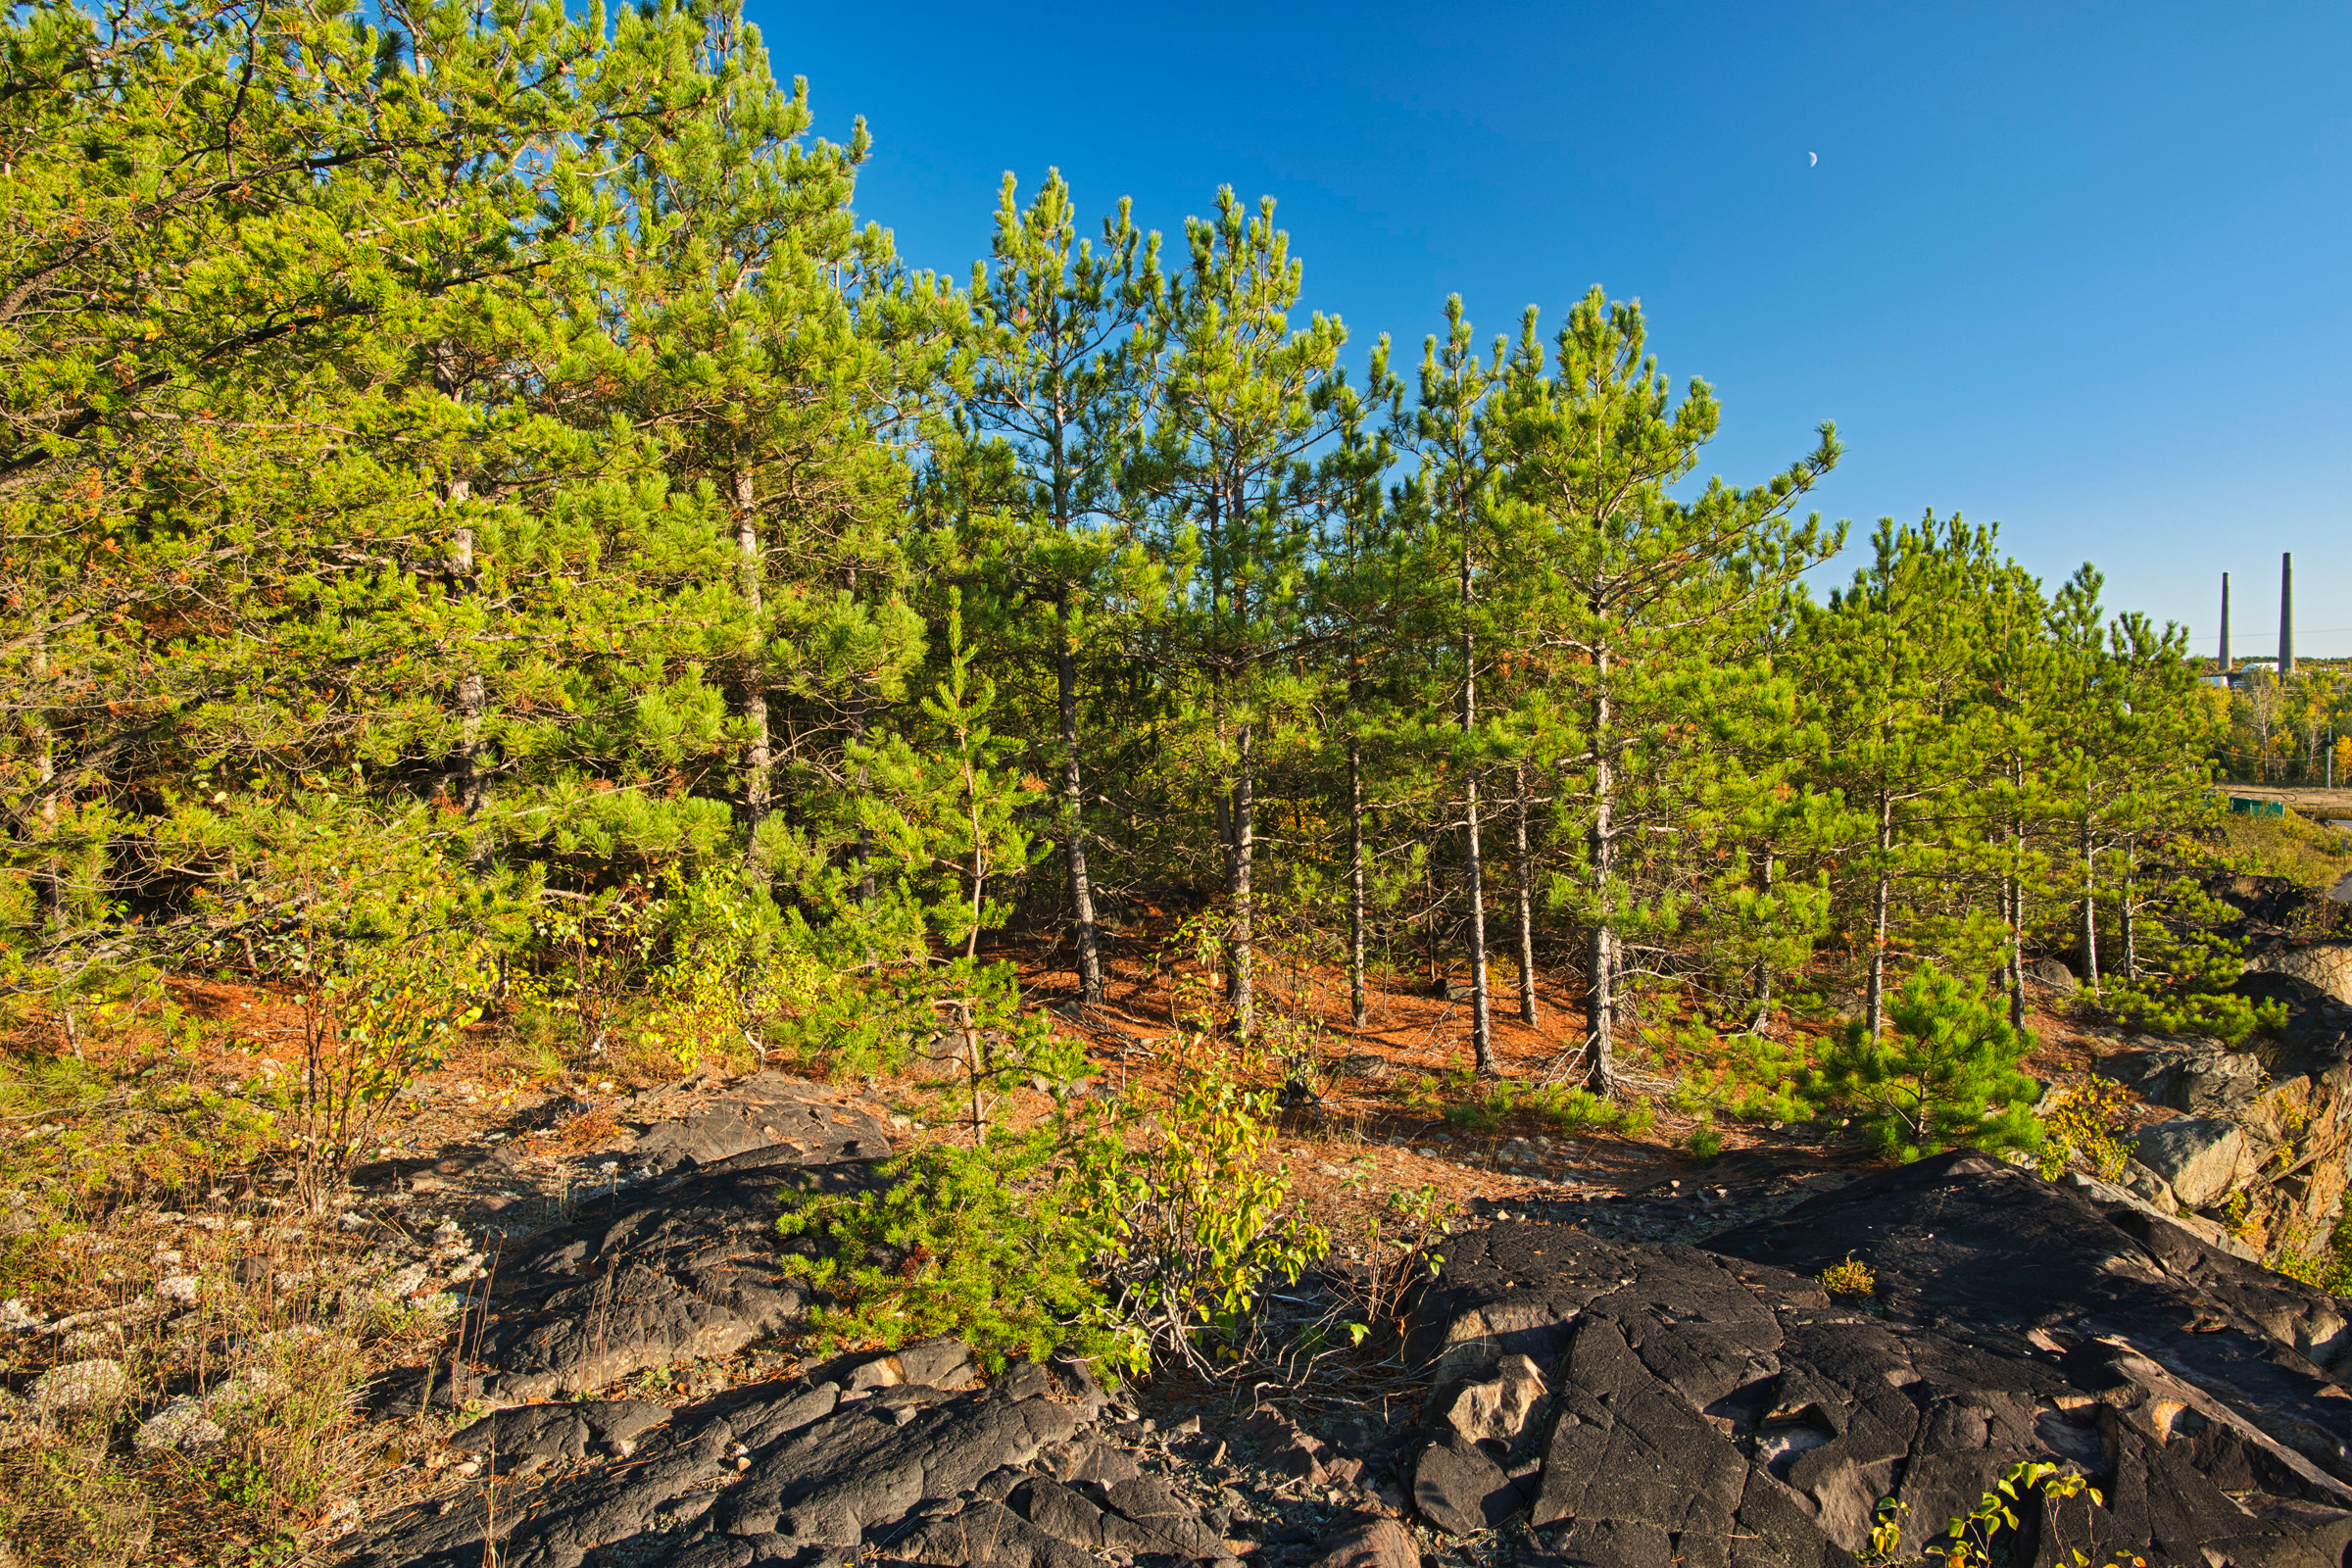     ©  Mike Grandmaison, Pine Trees on the Jane Goodall Interpretive Trail, 2019, Sudbury, Ontario

